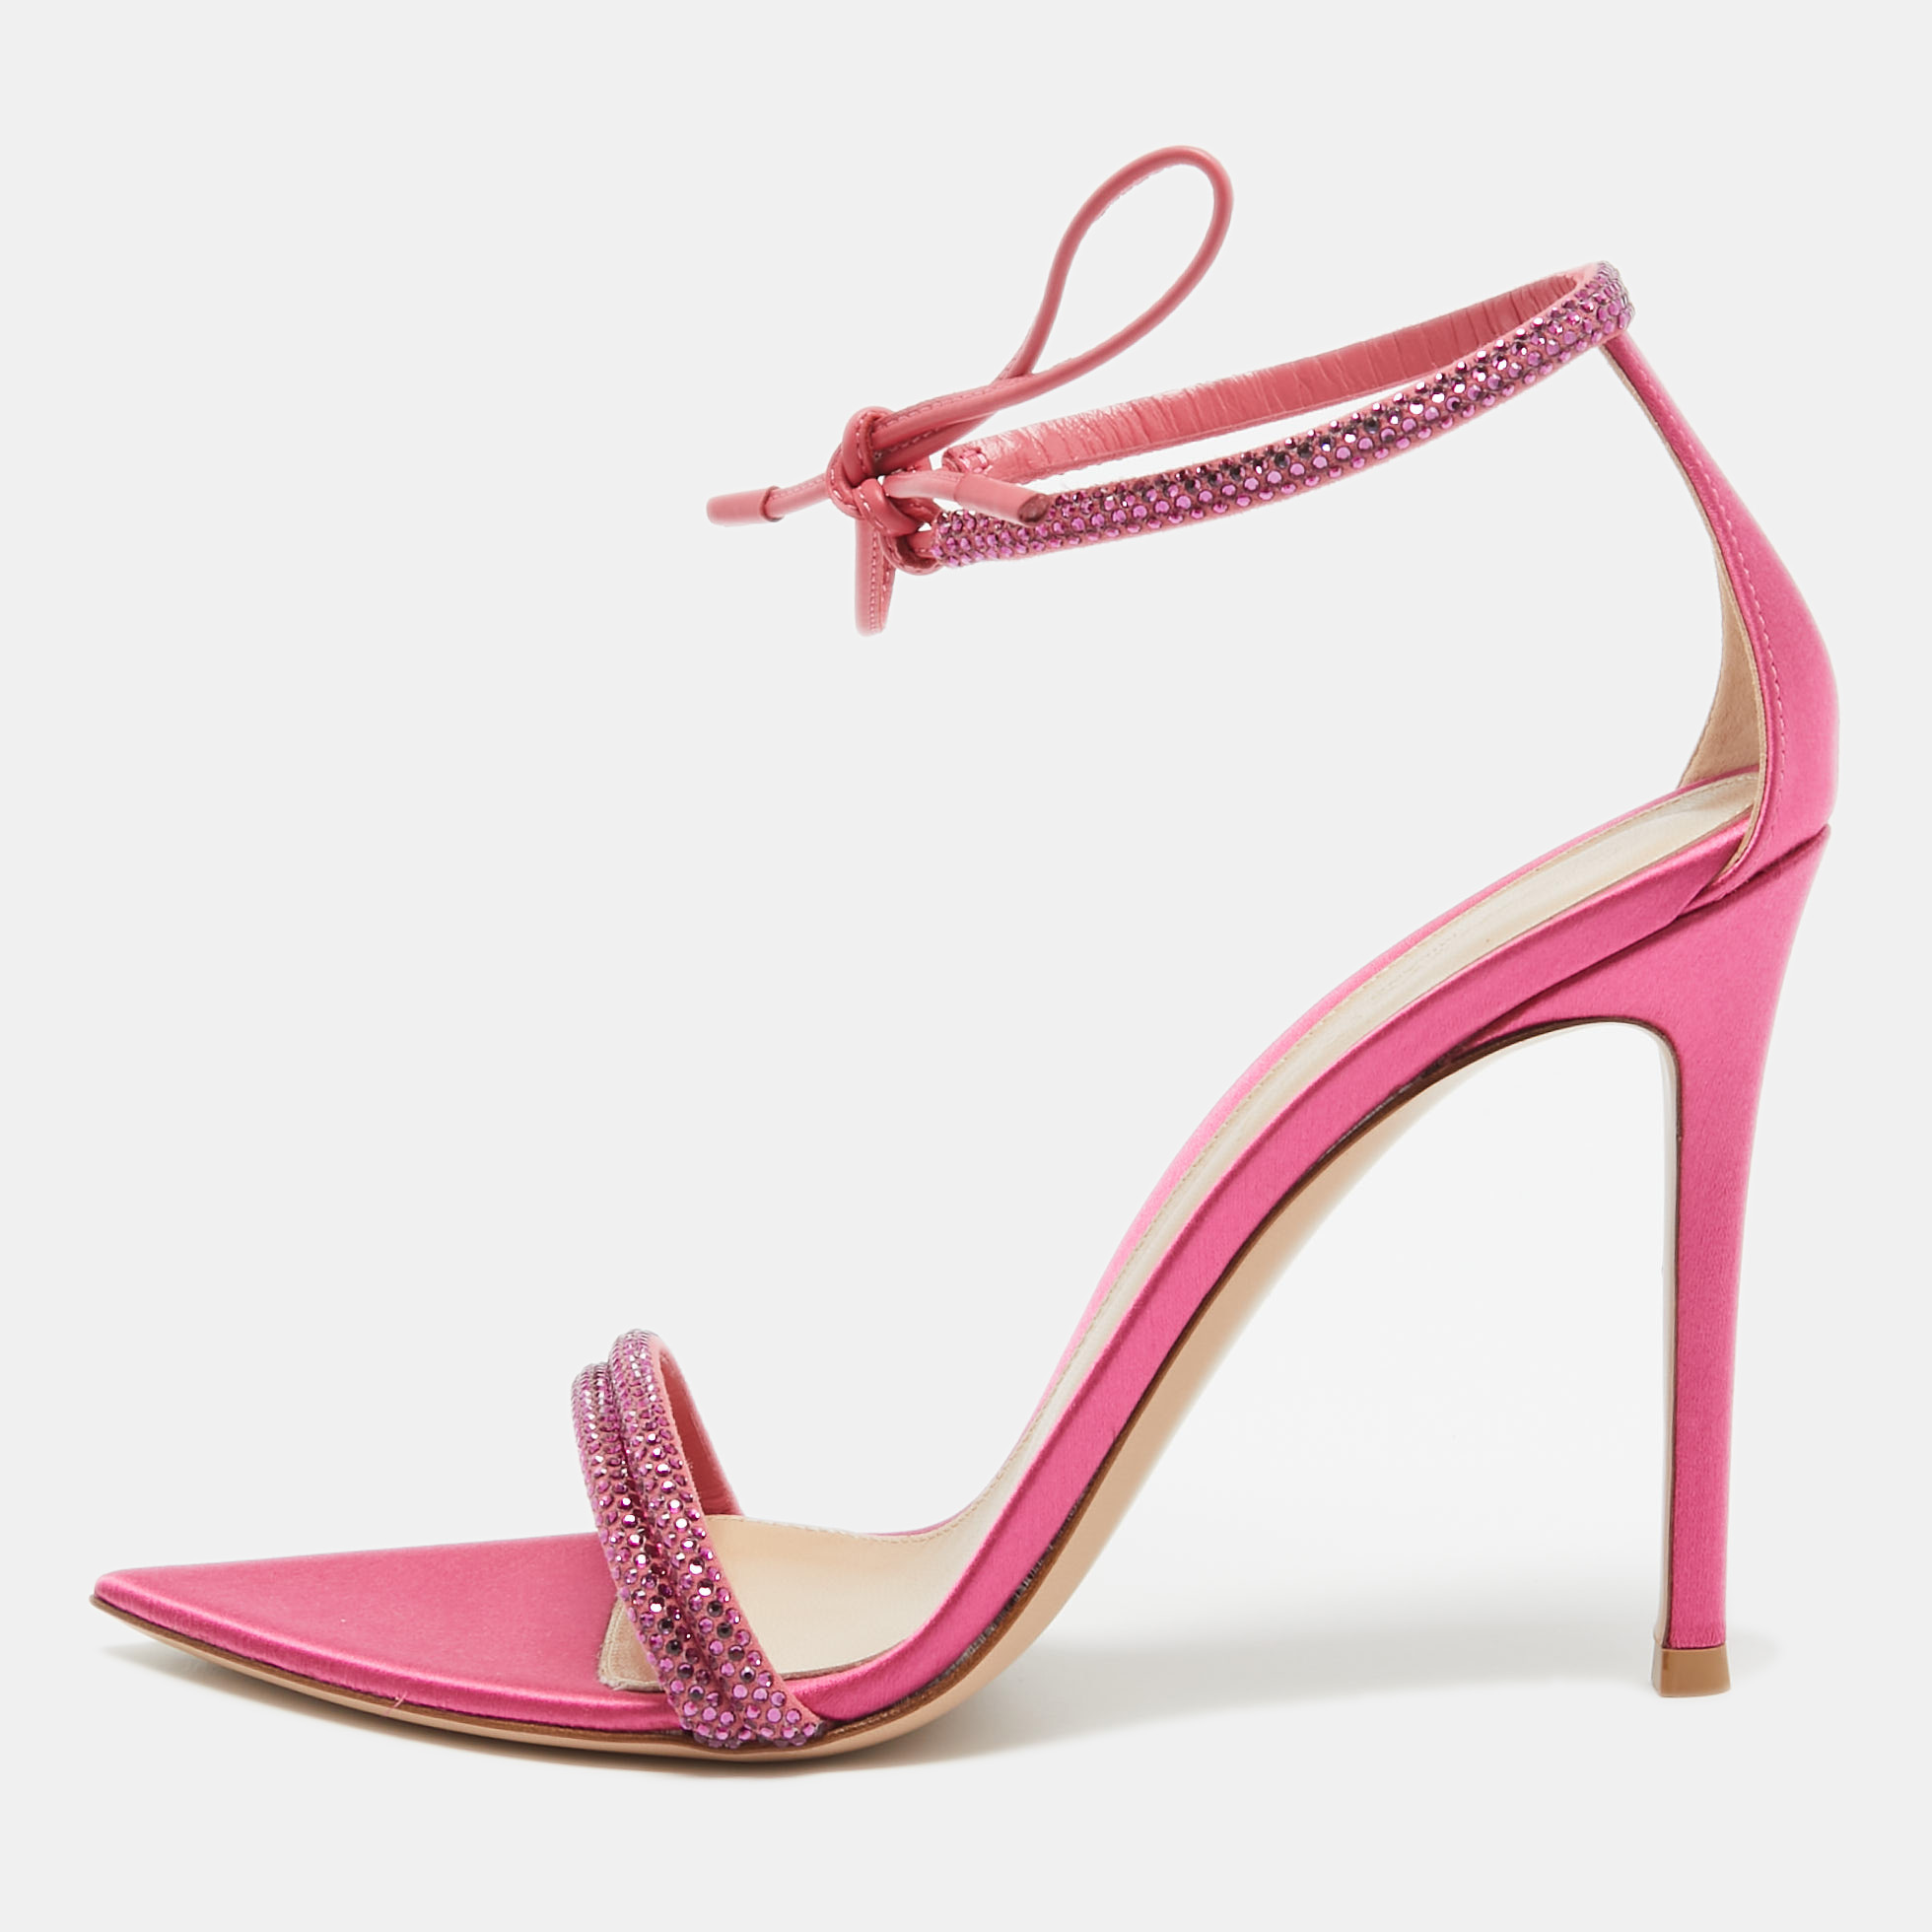 Gianvito rossi pink satin embellished montecarlo sandals size 38.5